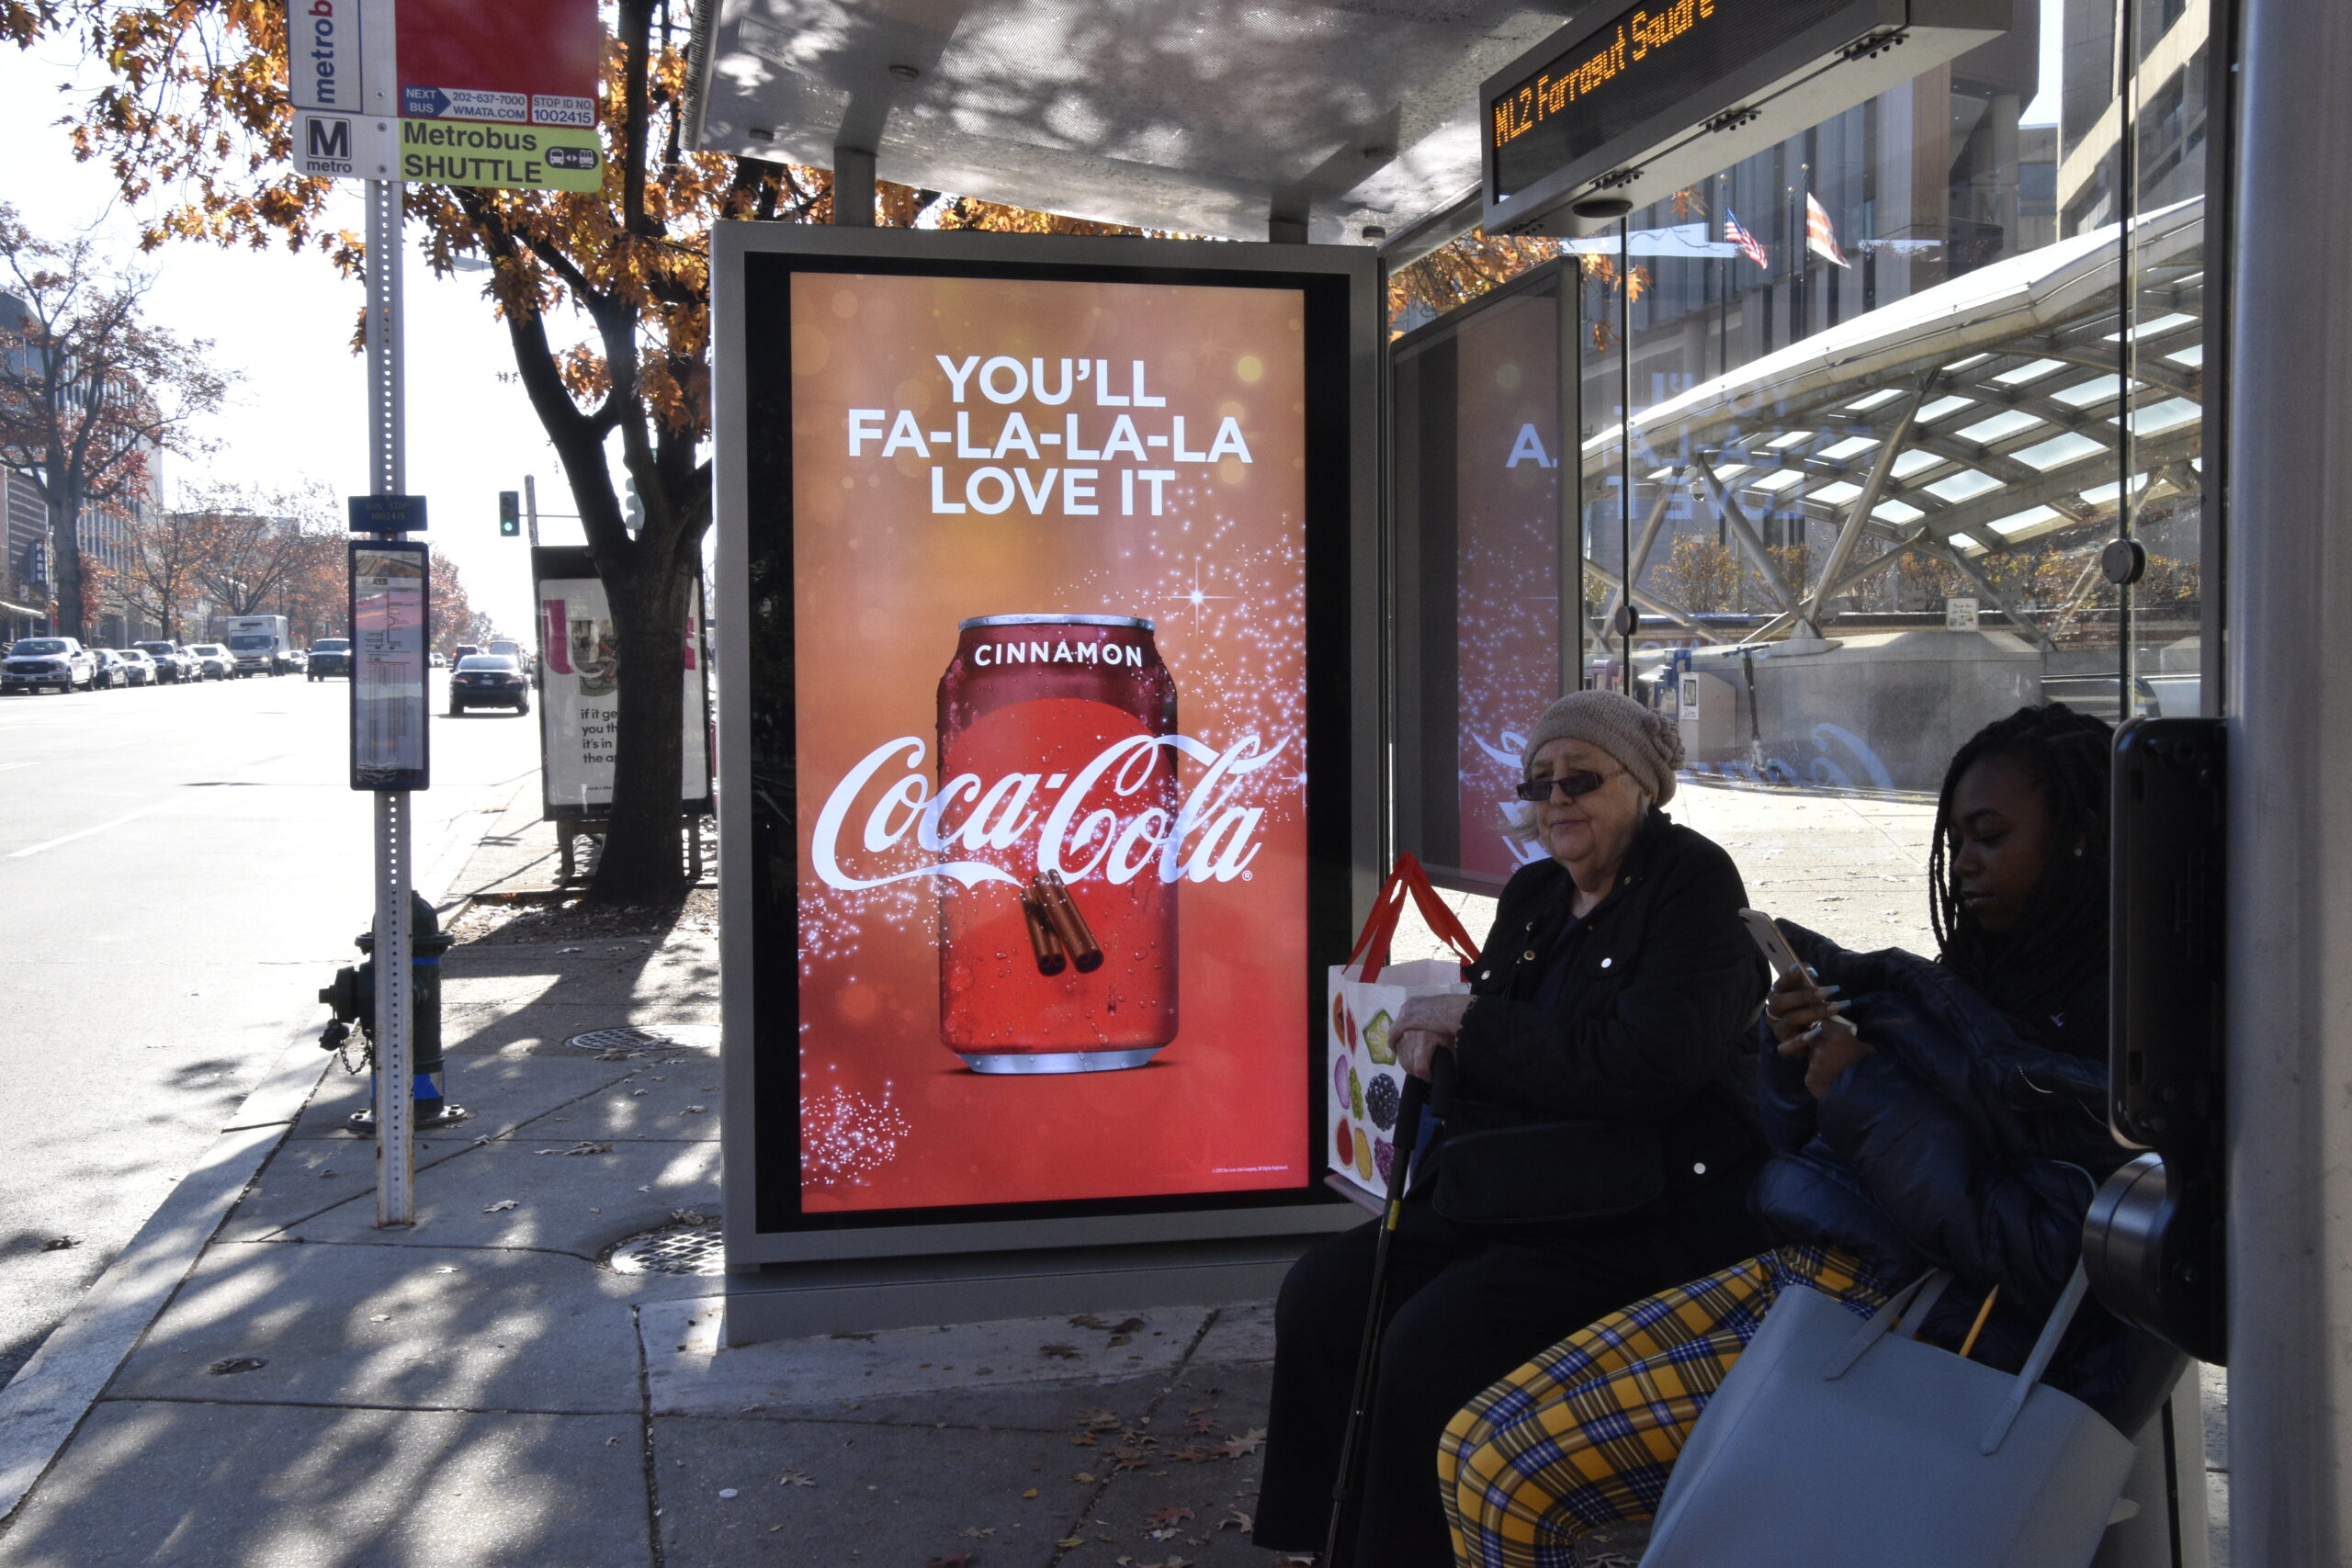 Coca-Cola: You'll FA-LA-LA-LA Love It 